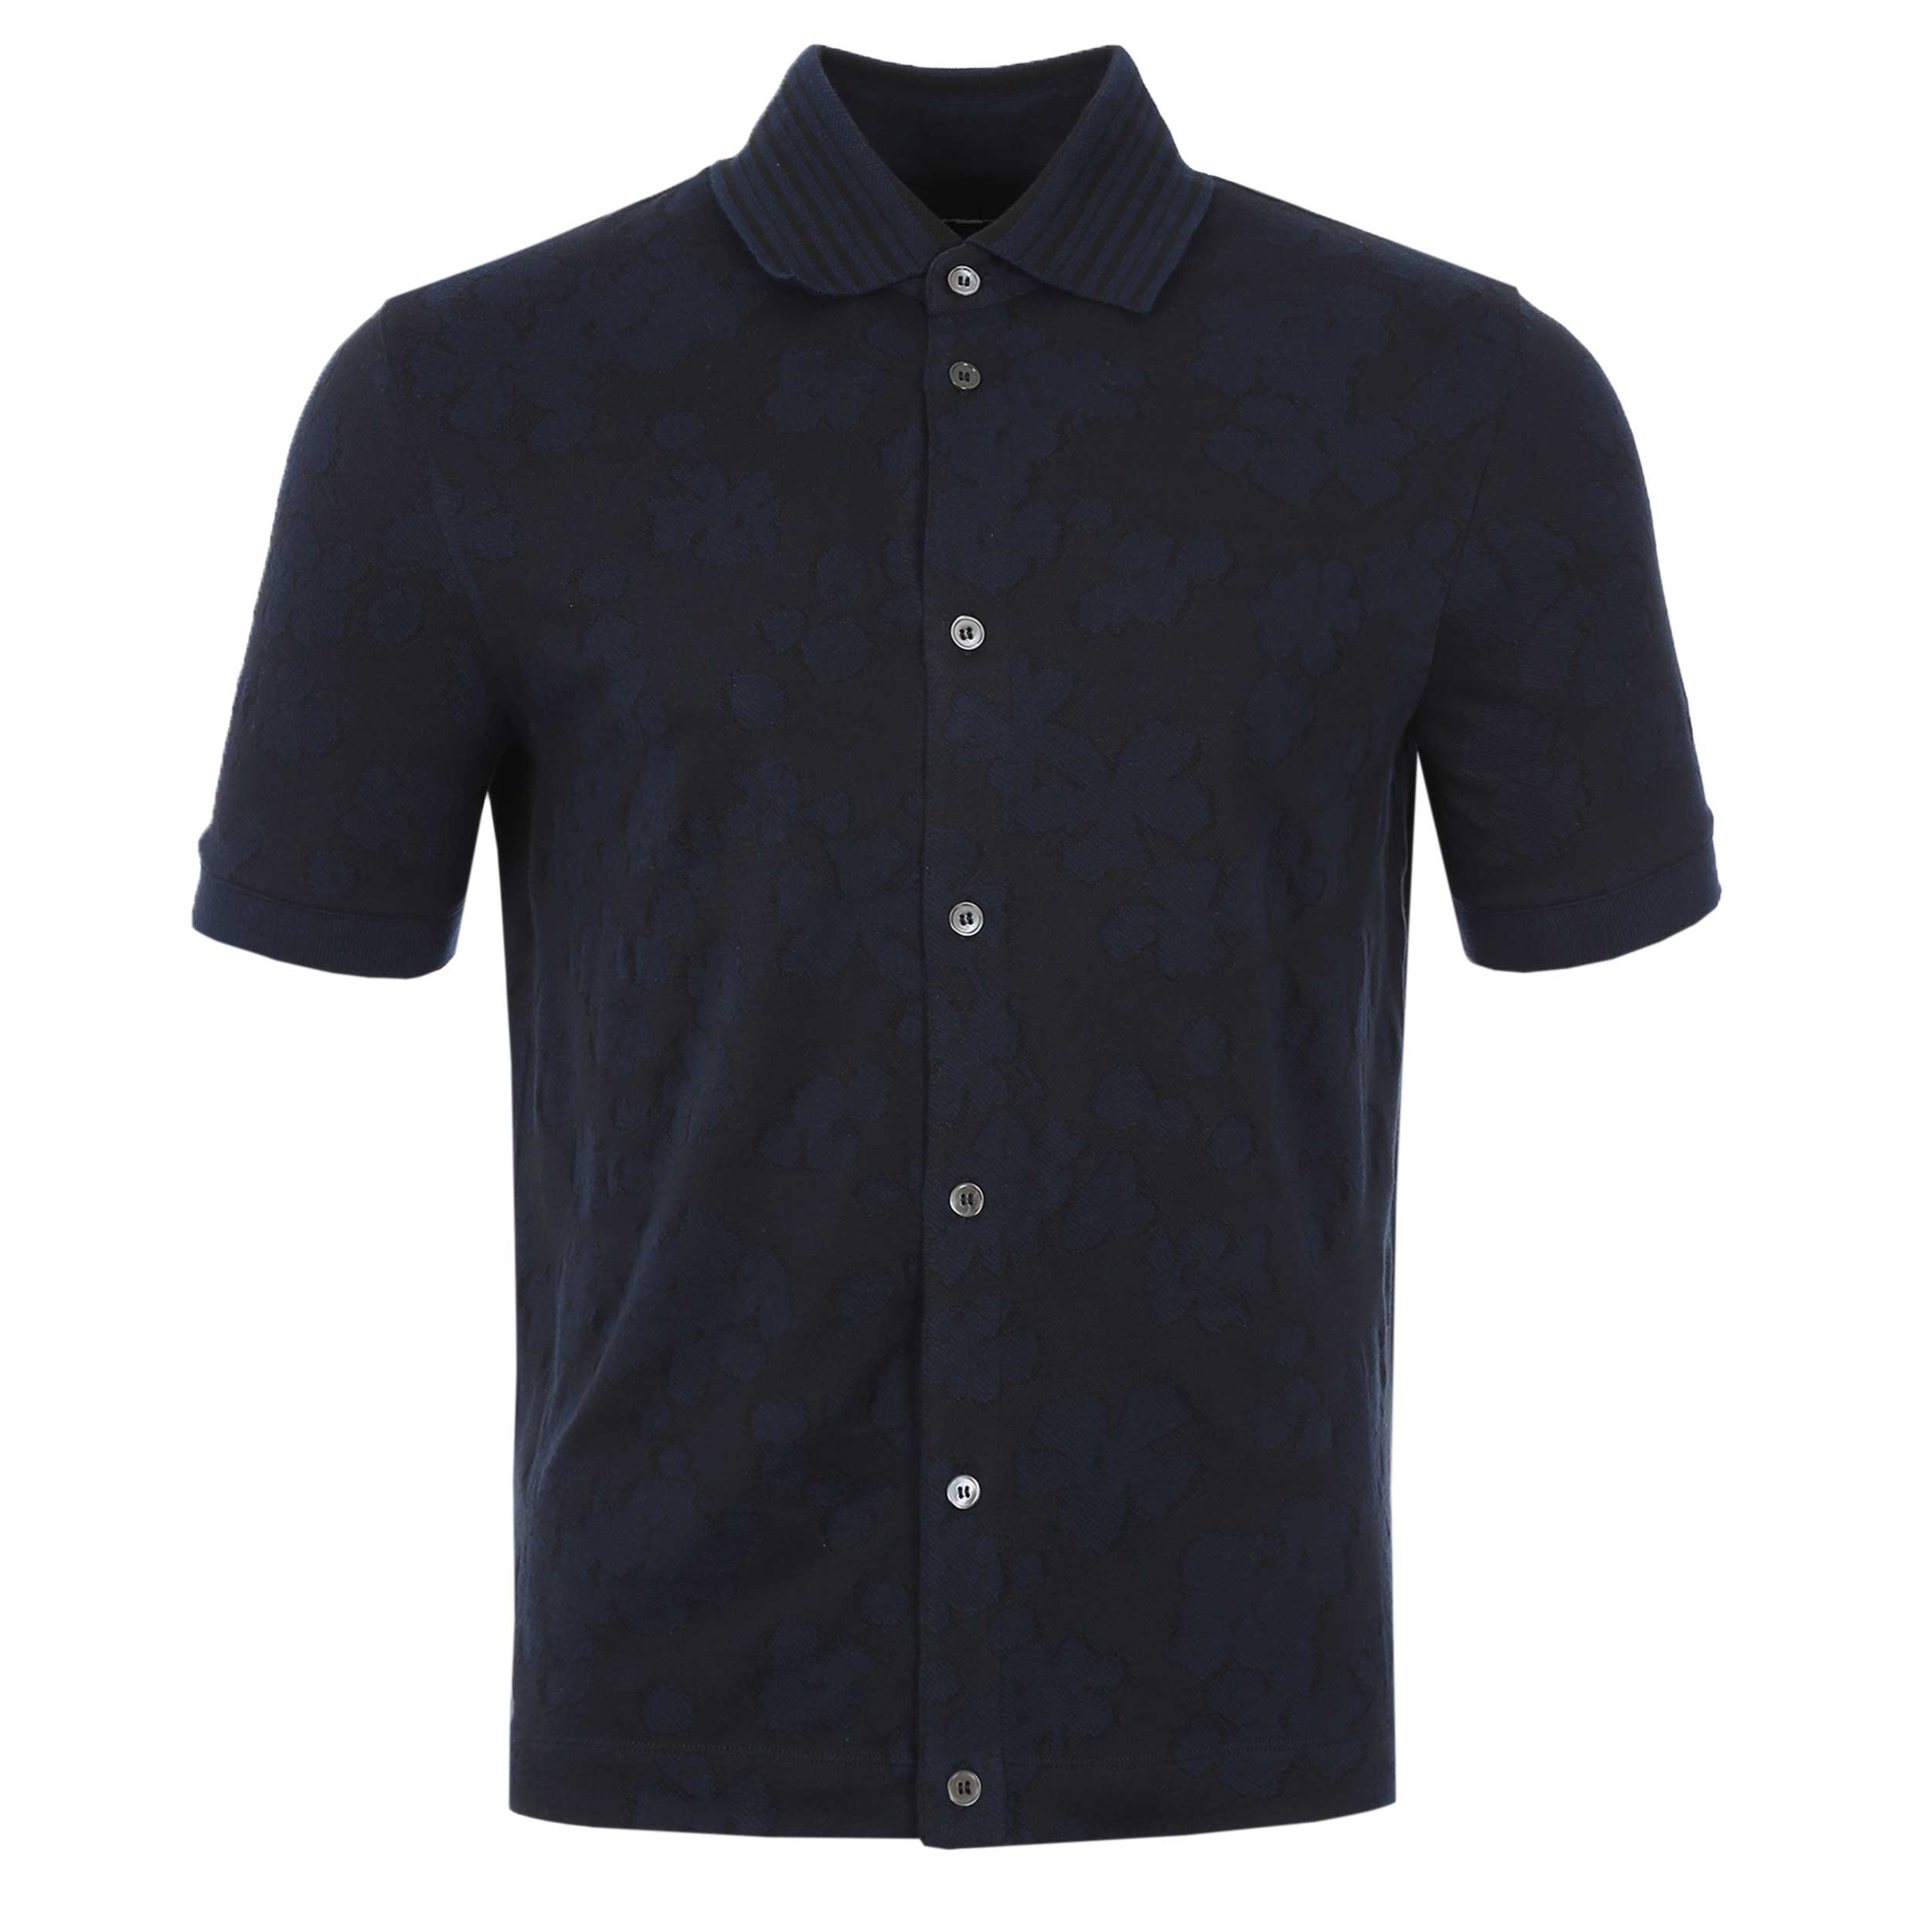 Paul Smith Floral Jacquard Polo Shirt in Dark Navy